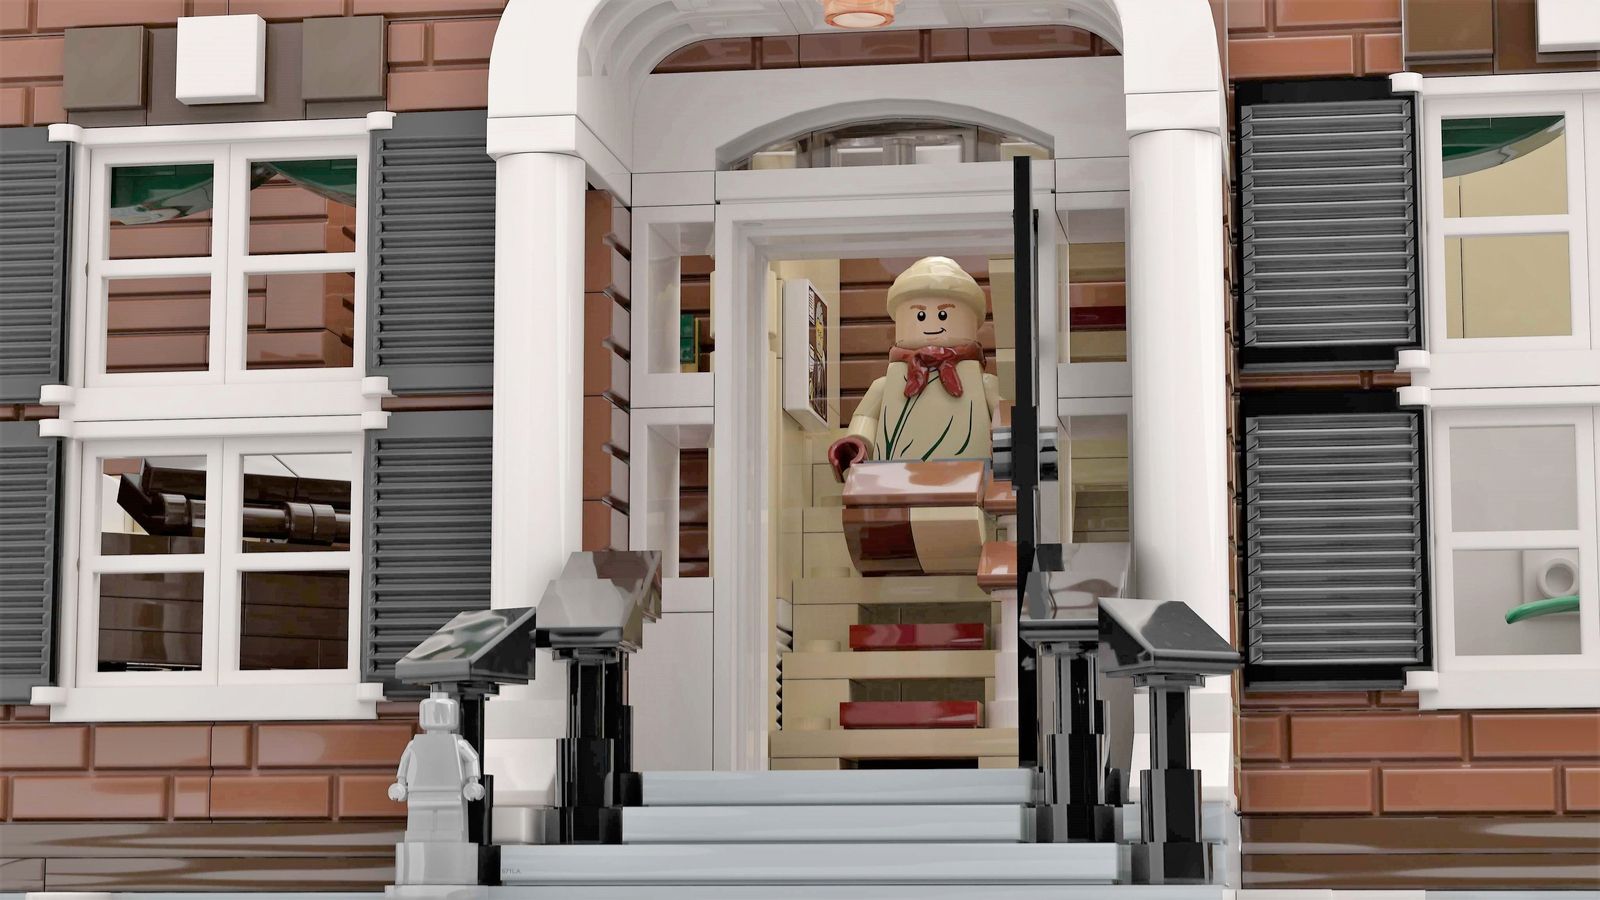 Home Alone Lego Set #3